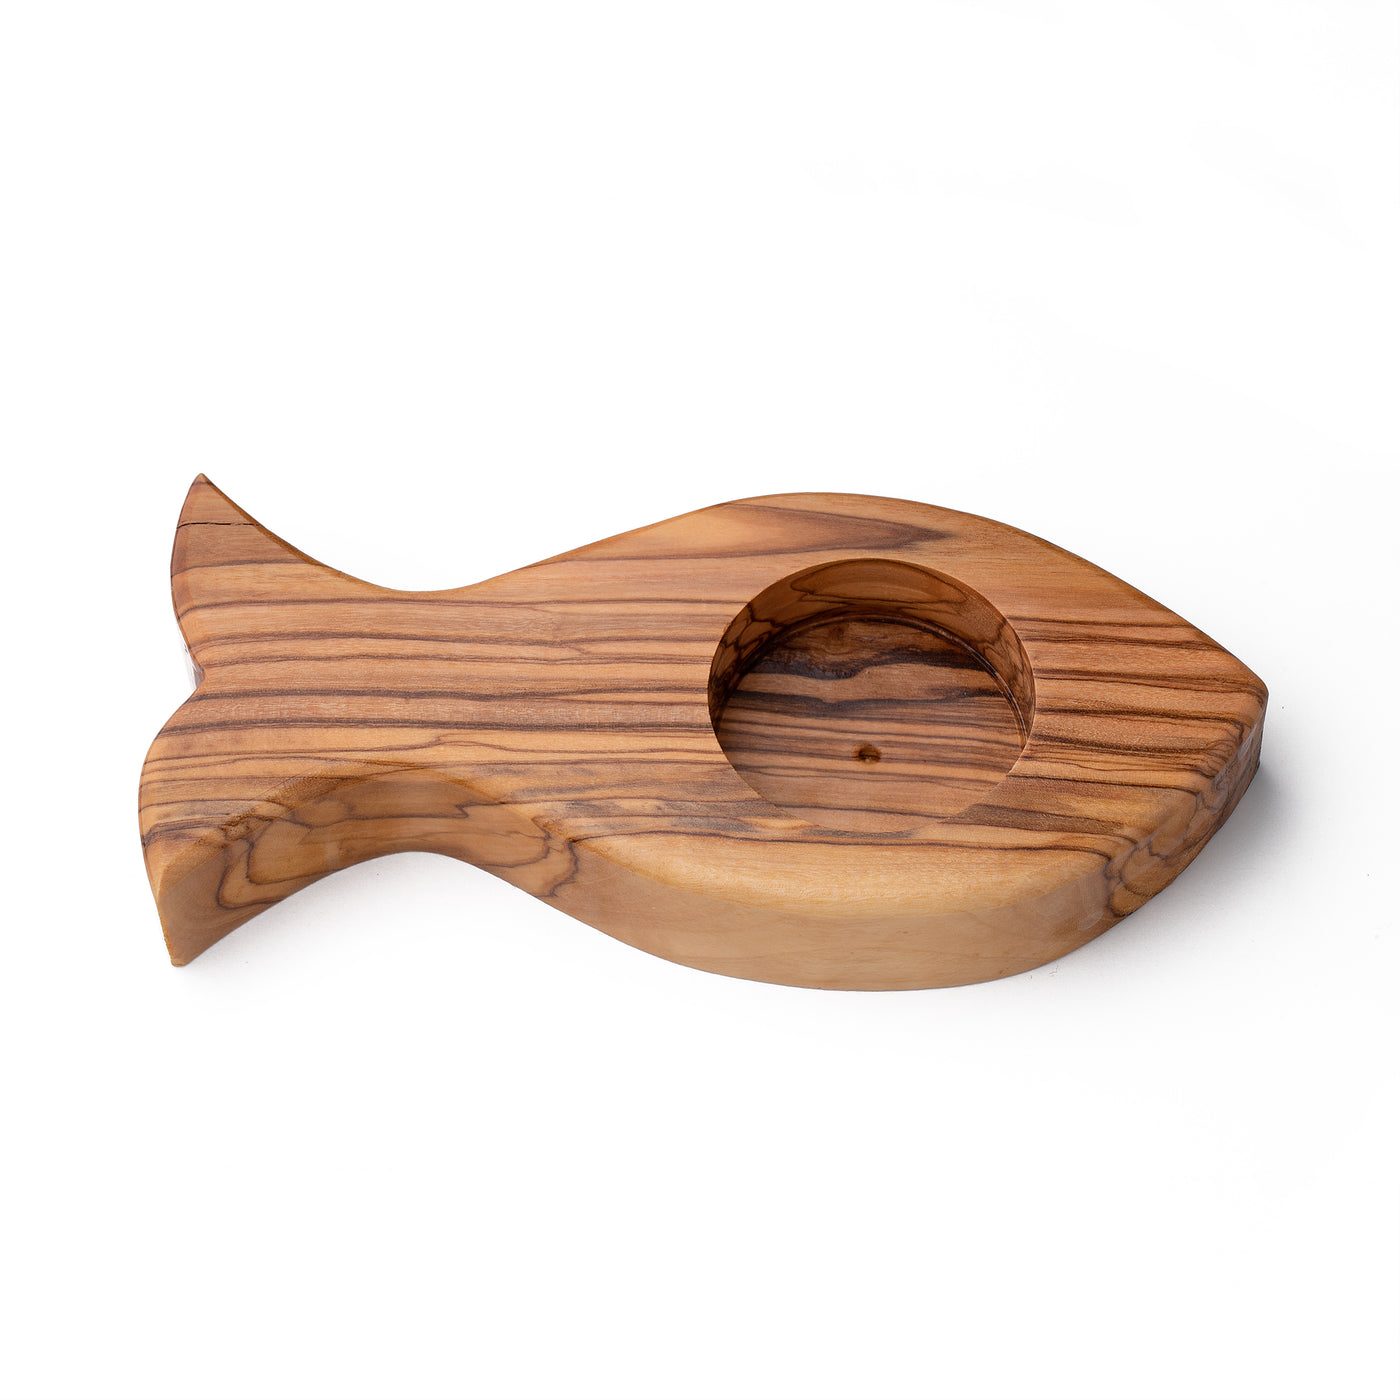 FISH CANDLE HOLDER - olive wood